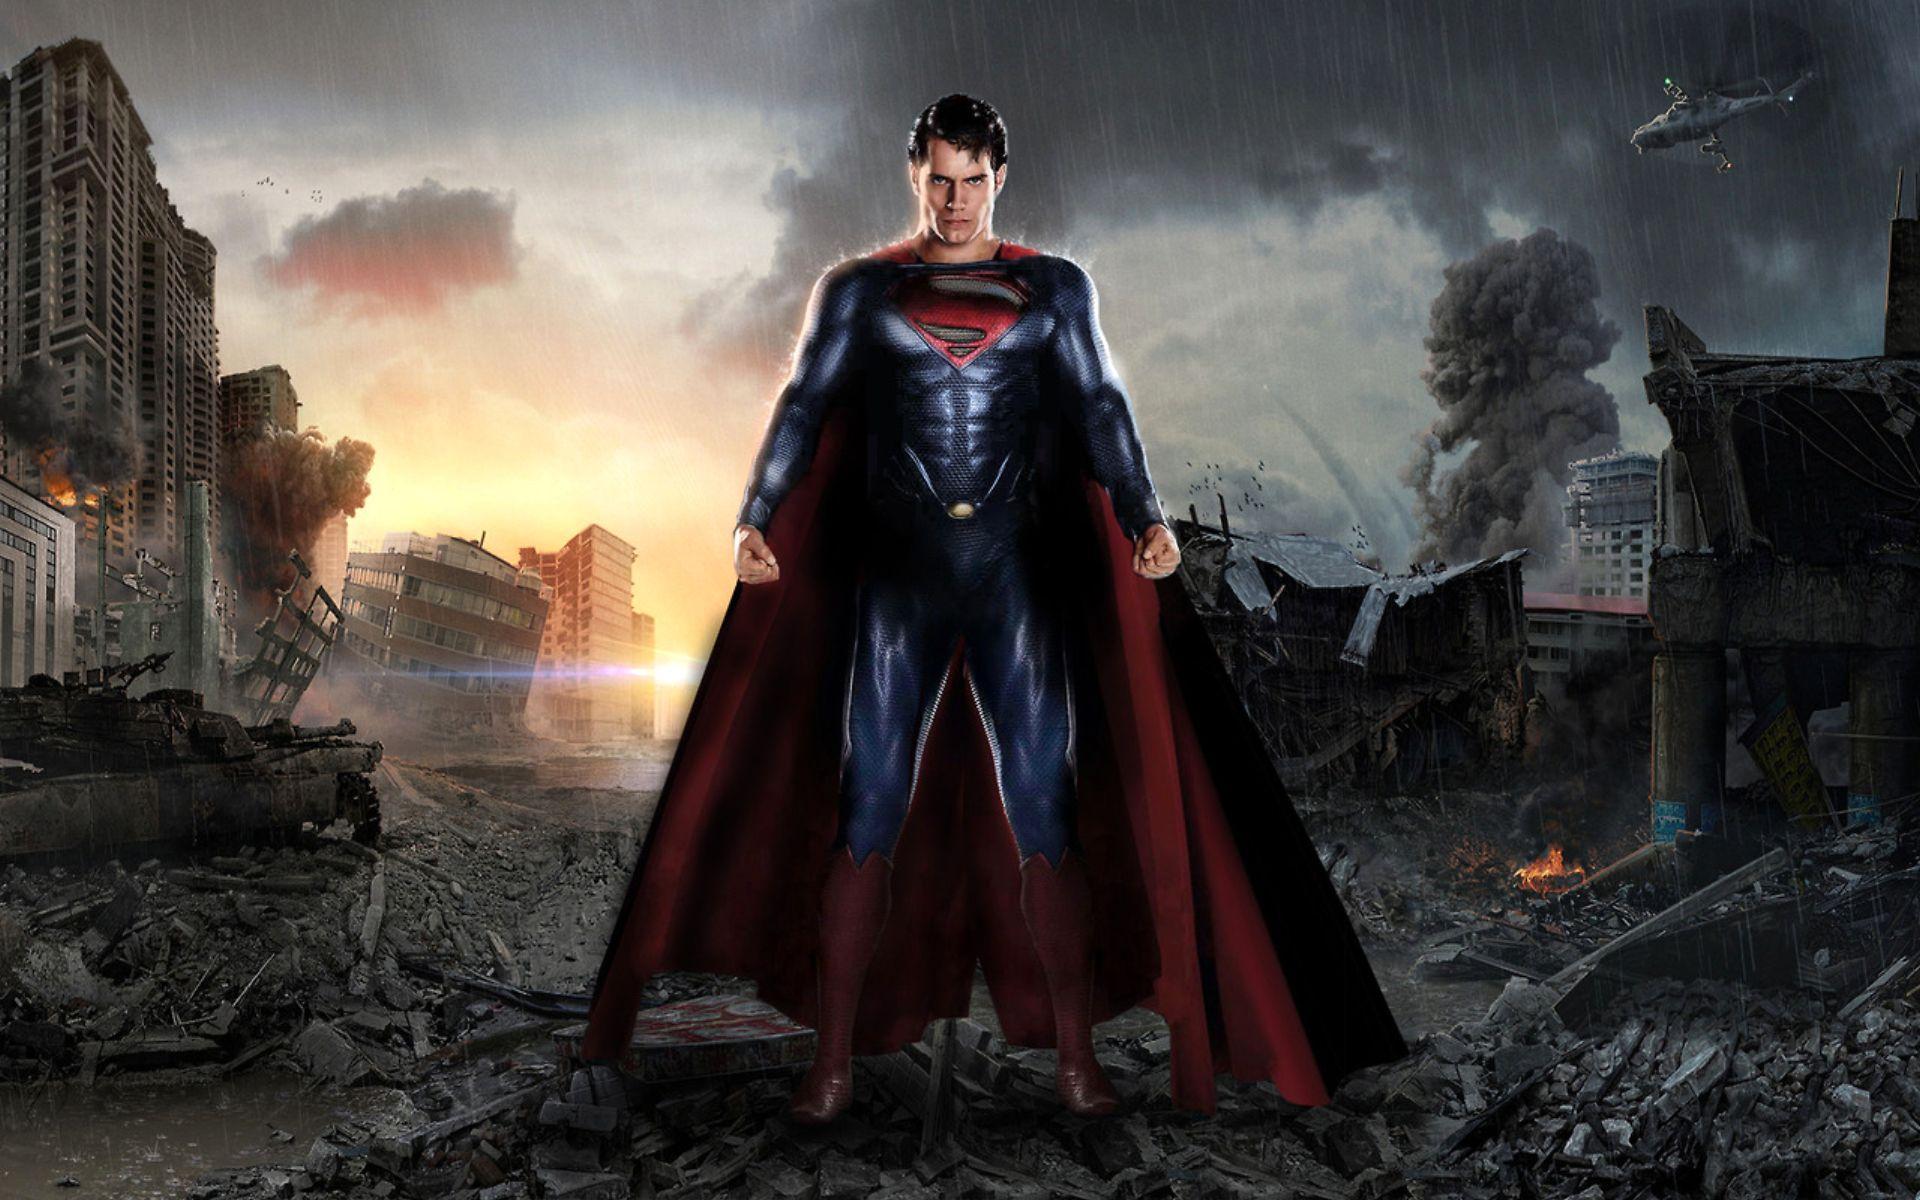 Superman Man Of Steel